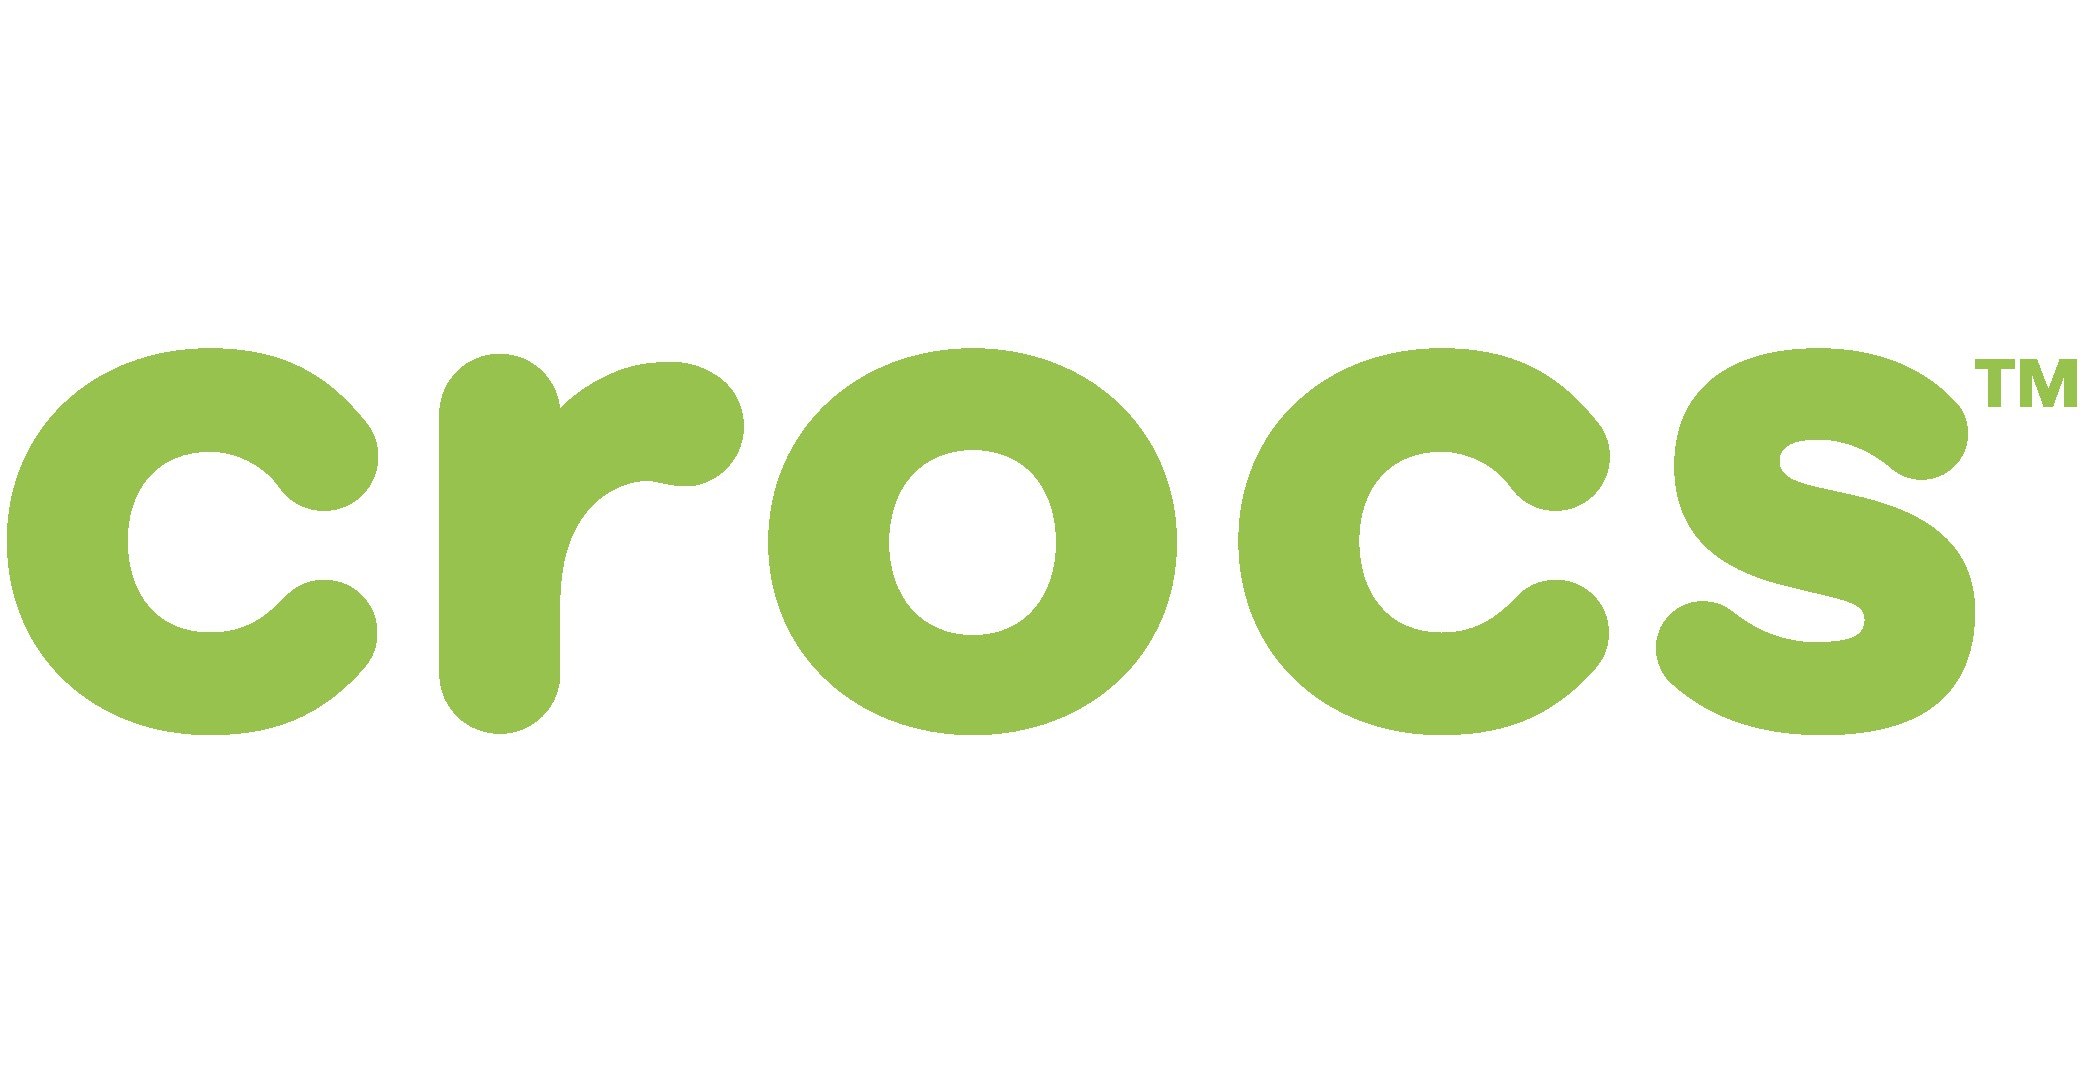 Local stores participating in Crocs takeback pilot program